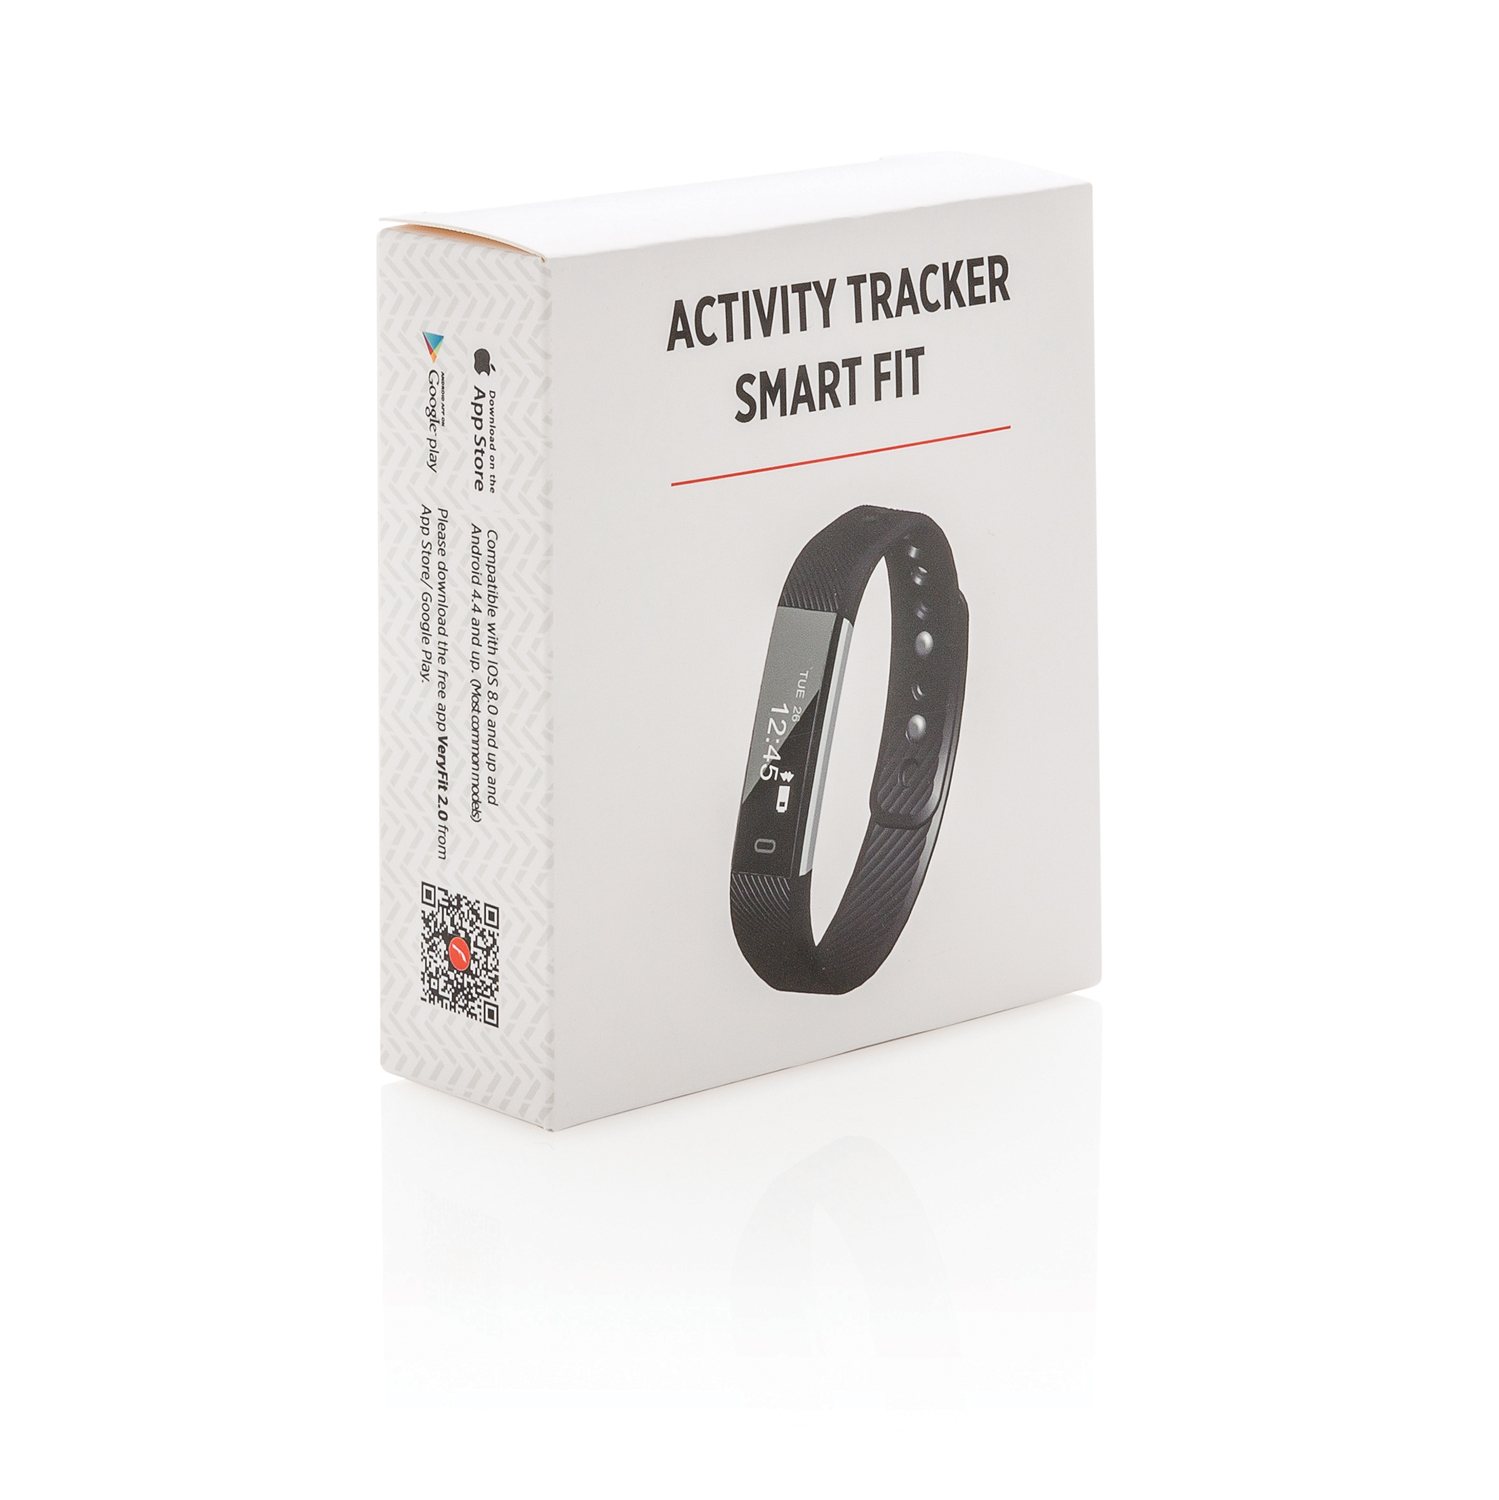 Фитнес-браслет Smart Fit. Смарт трекер. Activity Tracker. Фит here смарт браслет. Смарт фит купить